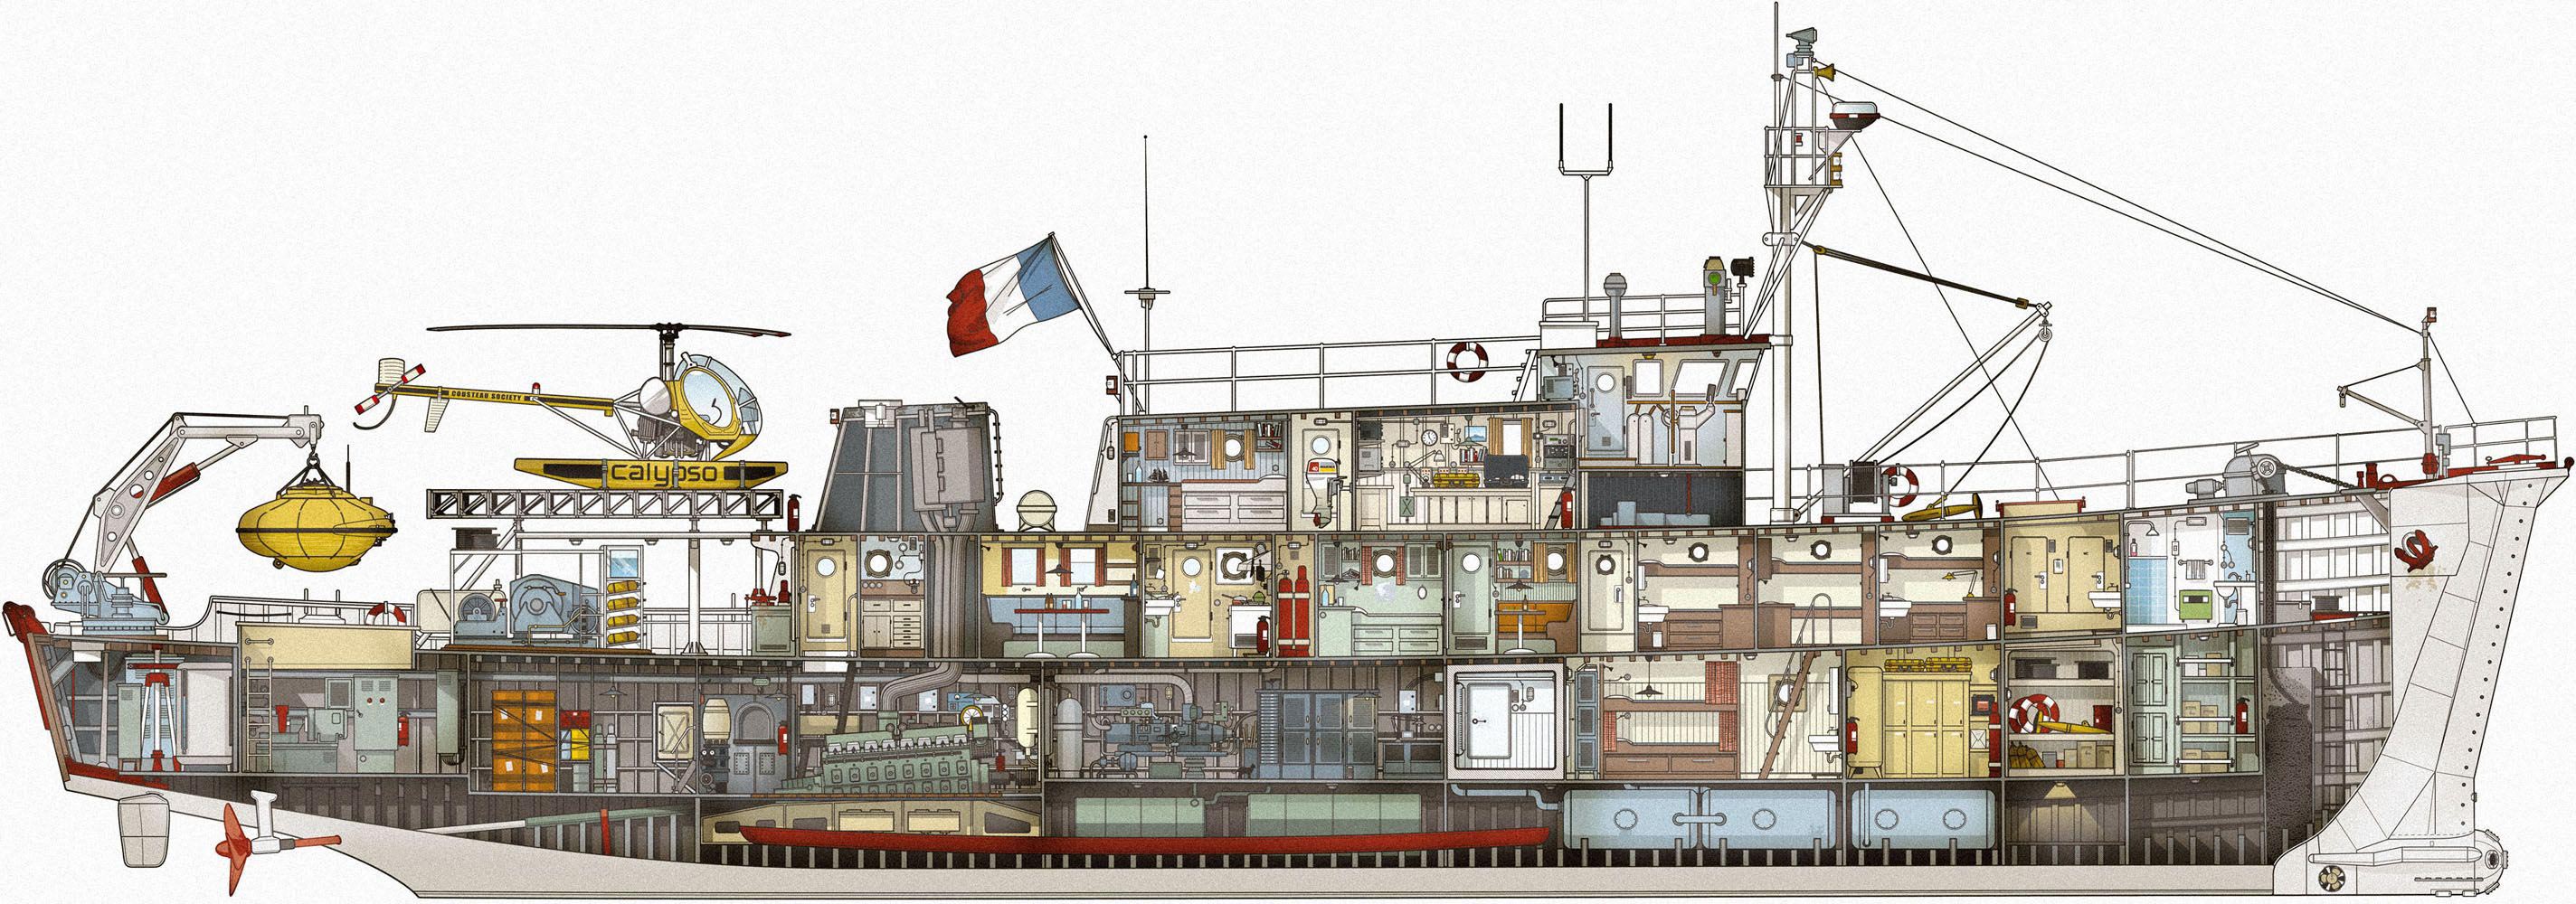 Steam ship model фото 103